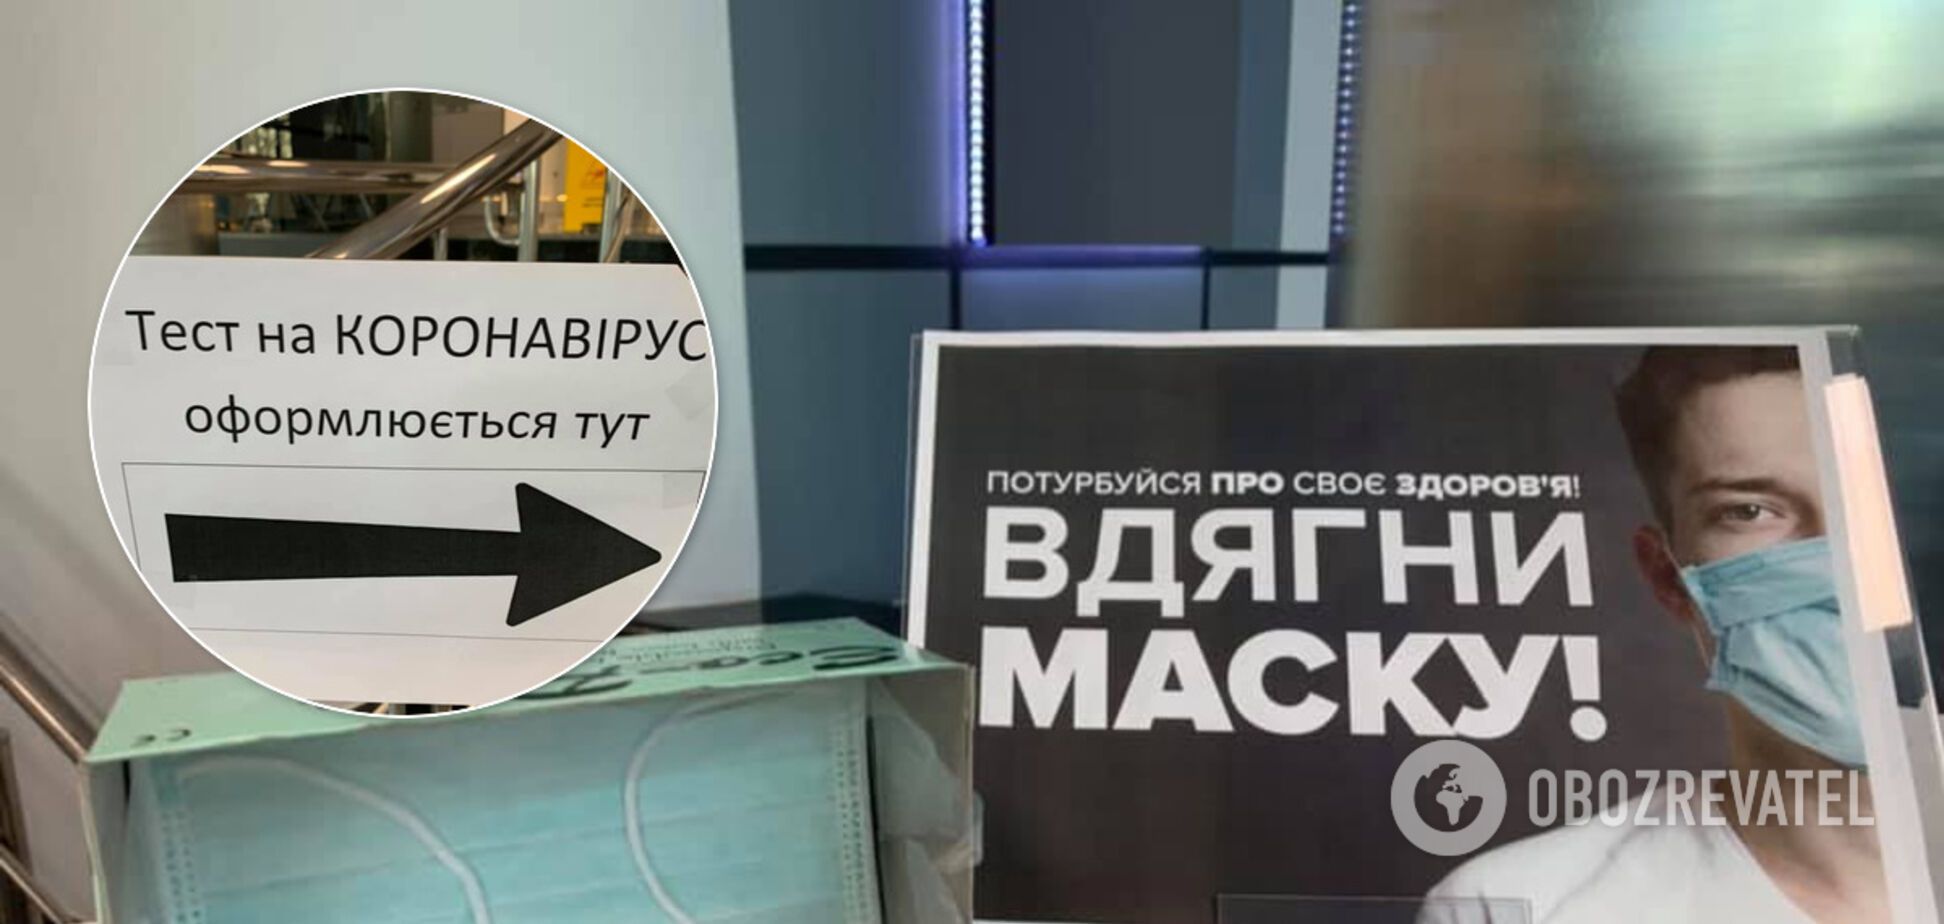 В Киеве начали предлагать тест на коронавирус за 16 тыс. грн: разгорелся скандал